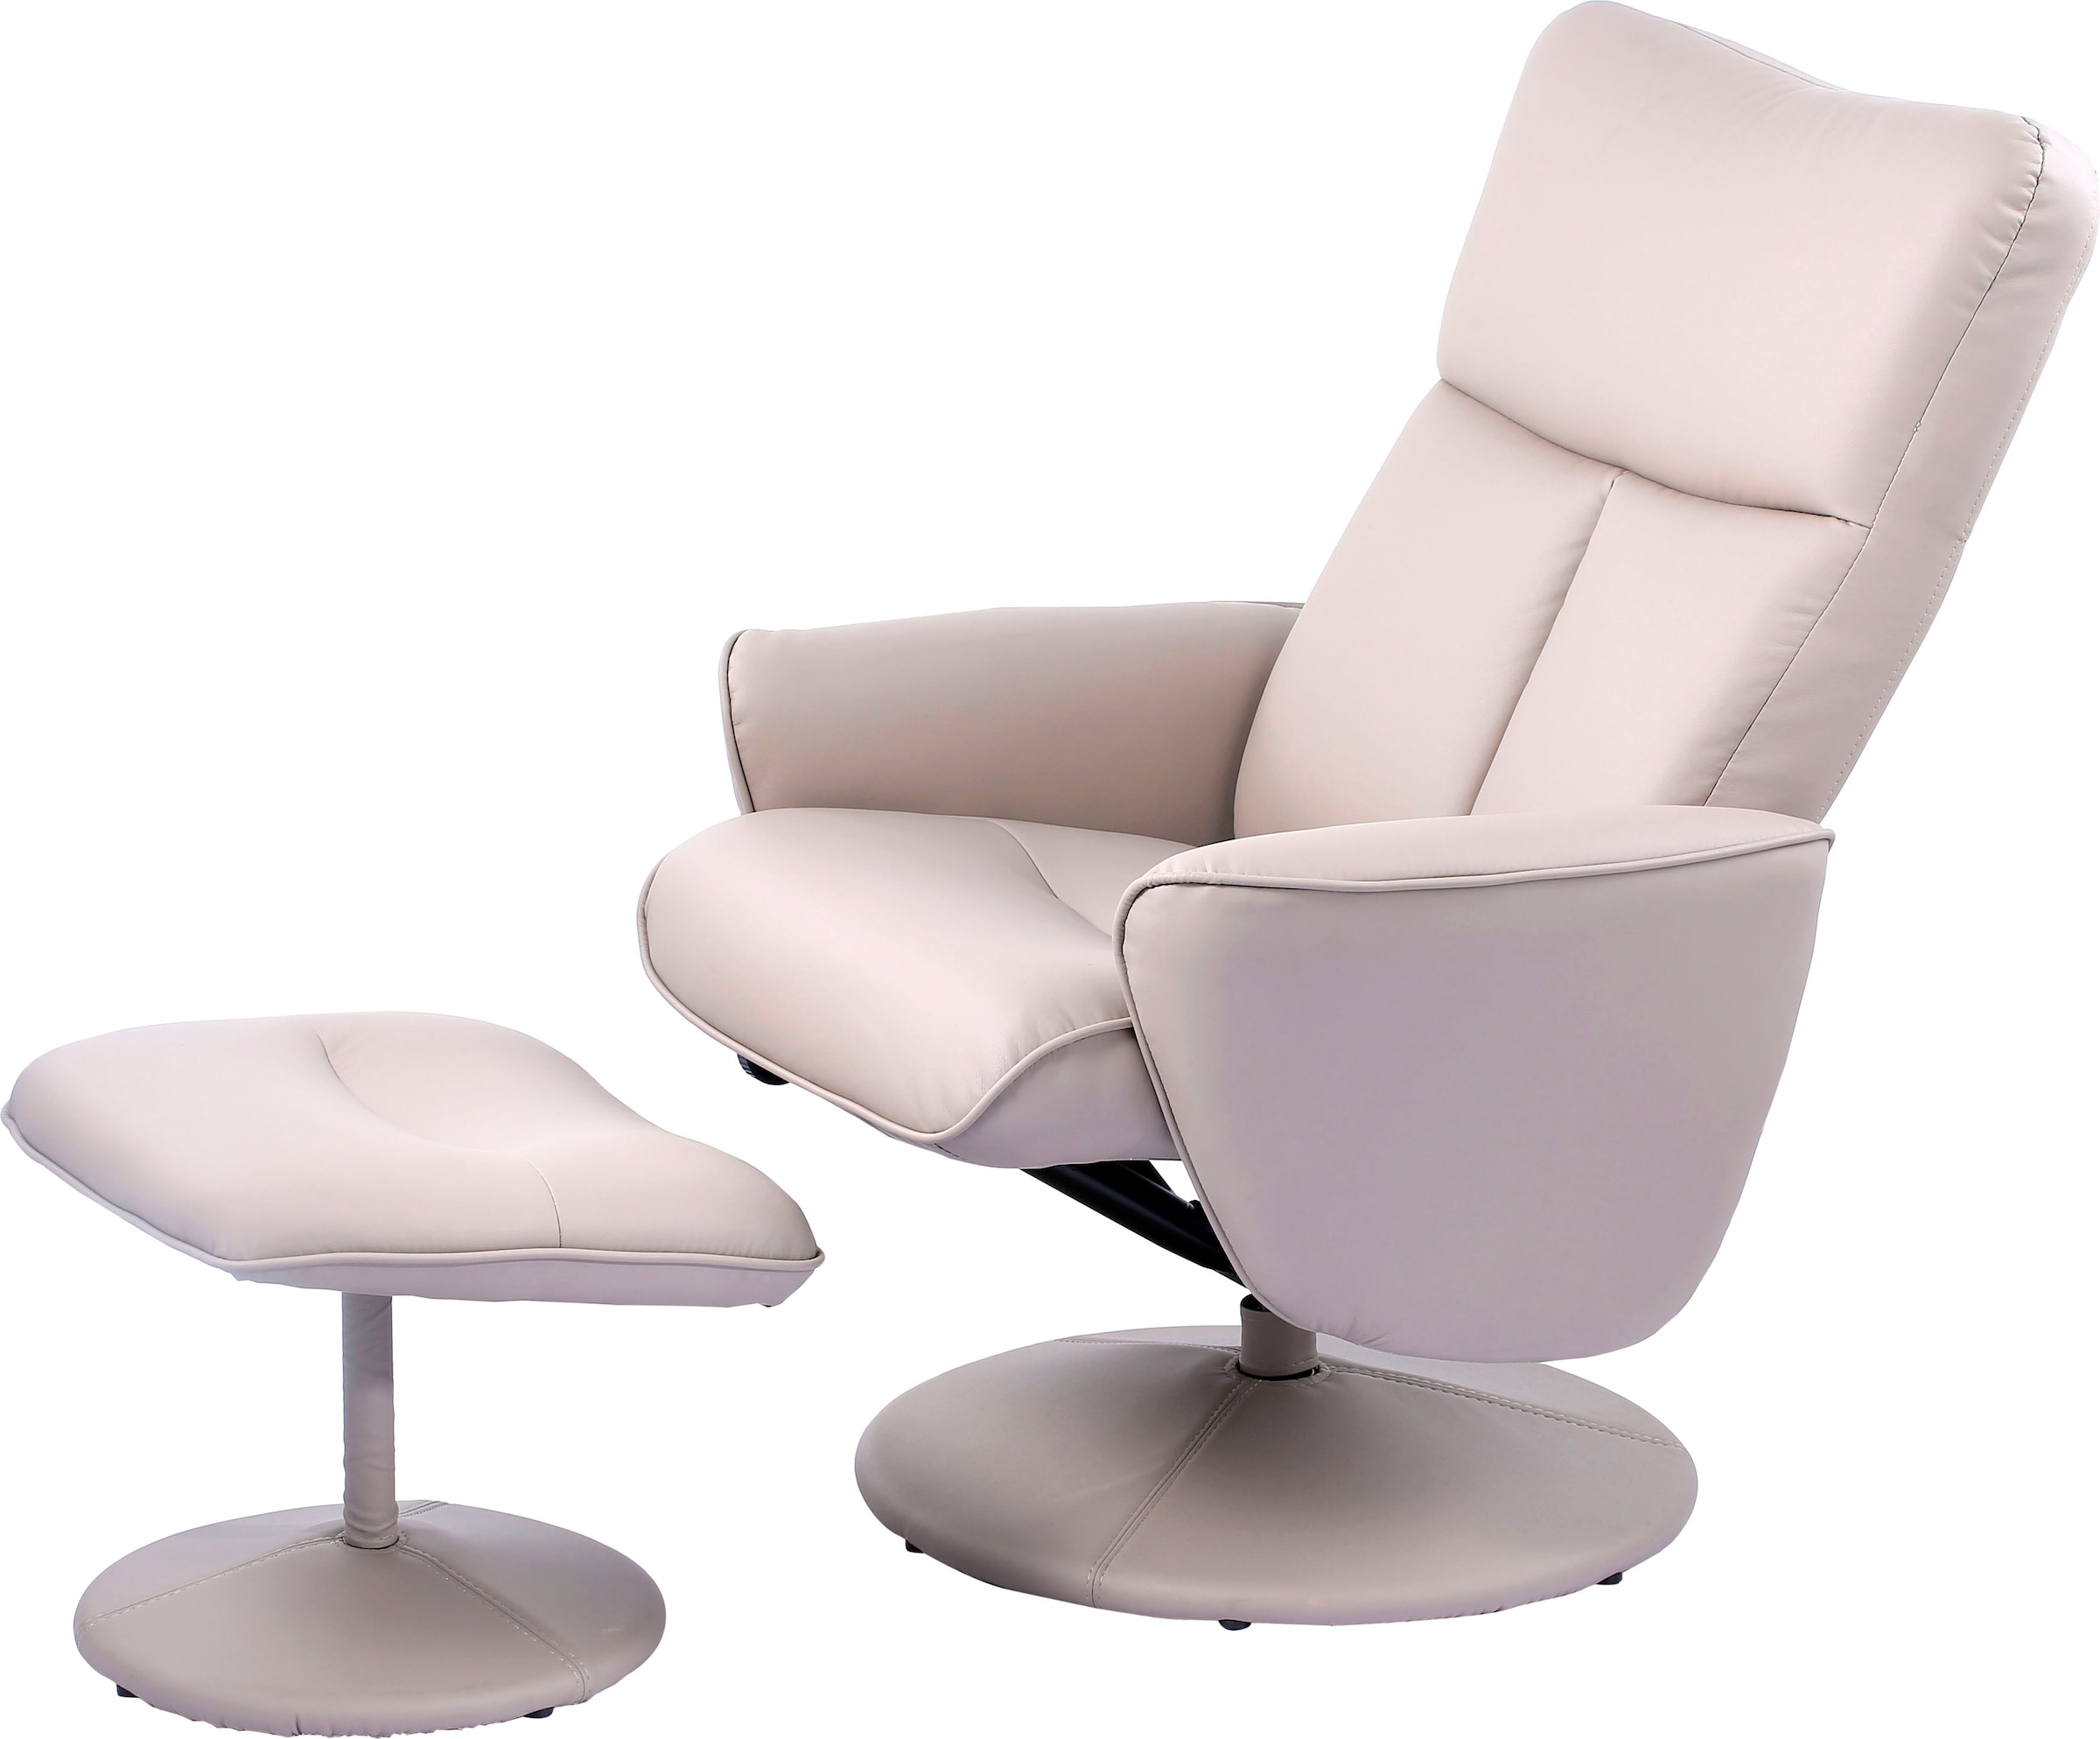 160«, bequemer Stuhl kaufen »Sessel Leandra Kayoom Hocker) jetzt Relax-Stuhl (ohne